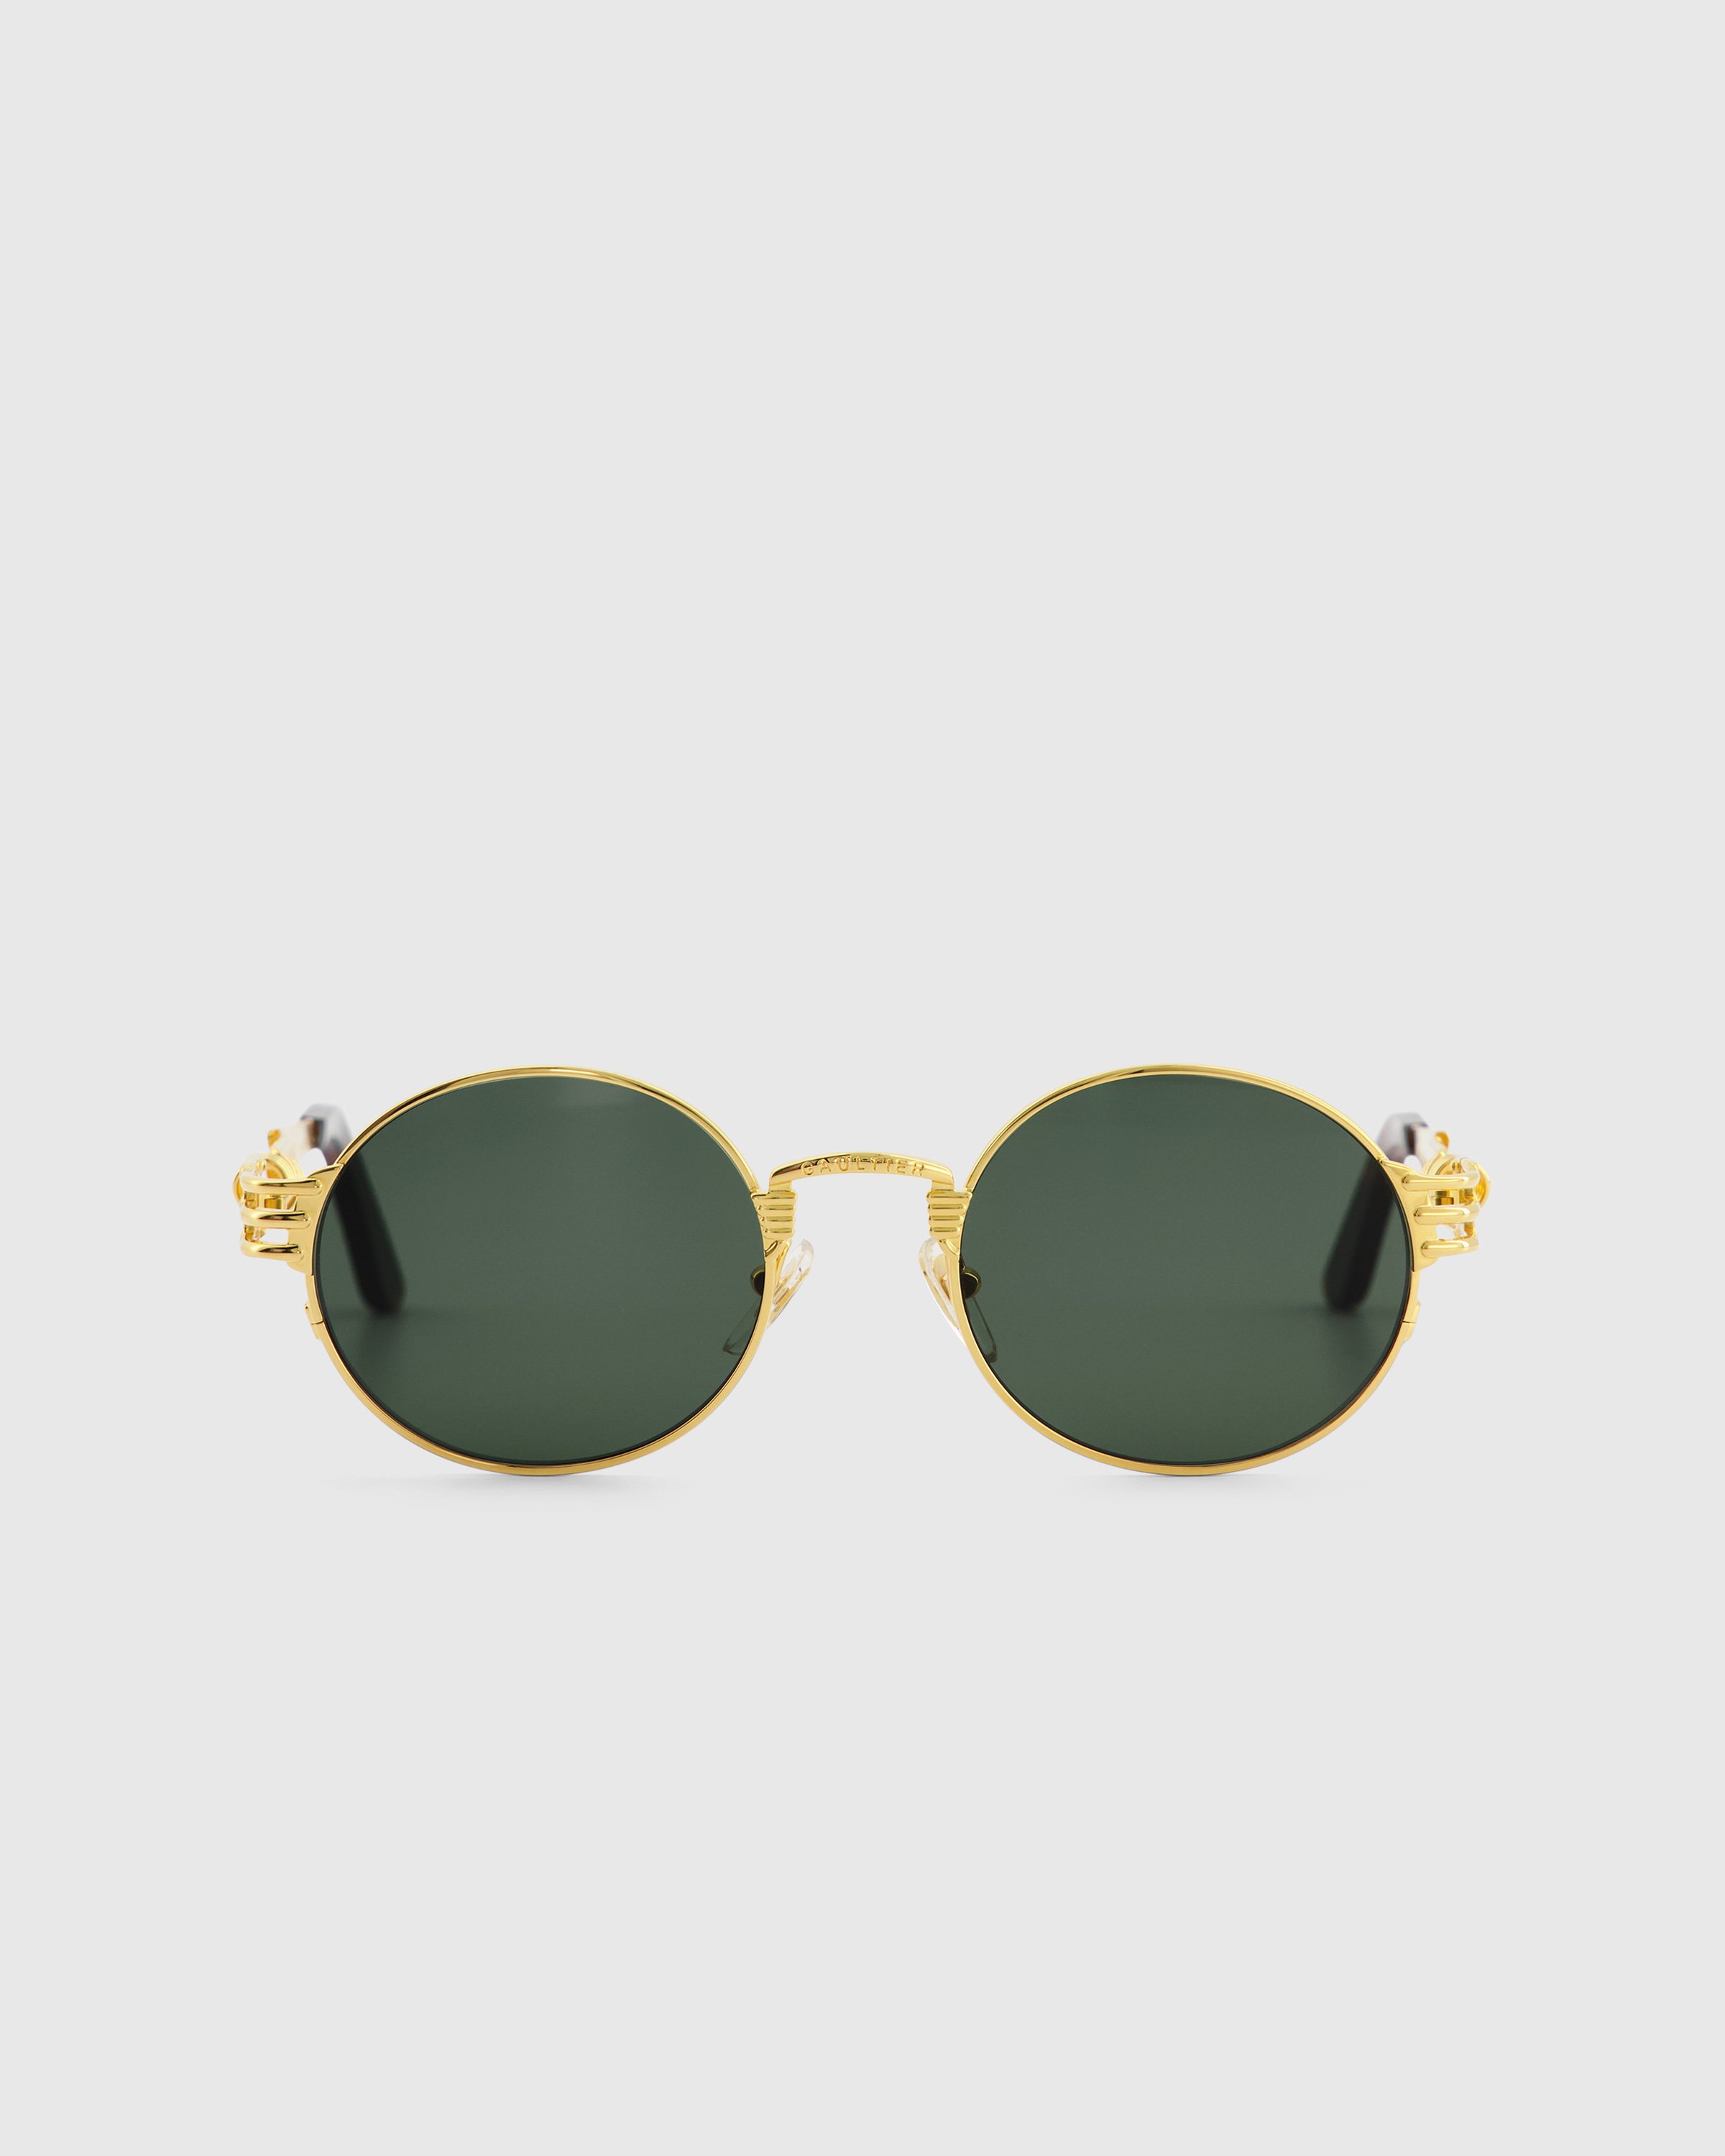 Jean Paul Gaultier x Burna Boy – 56-6106 Double Resort Sunglasses Black